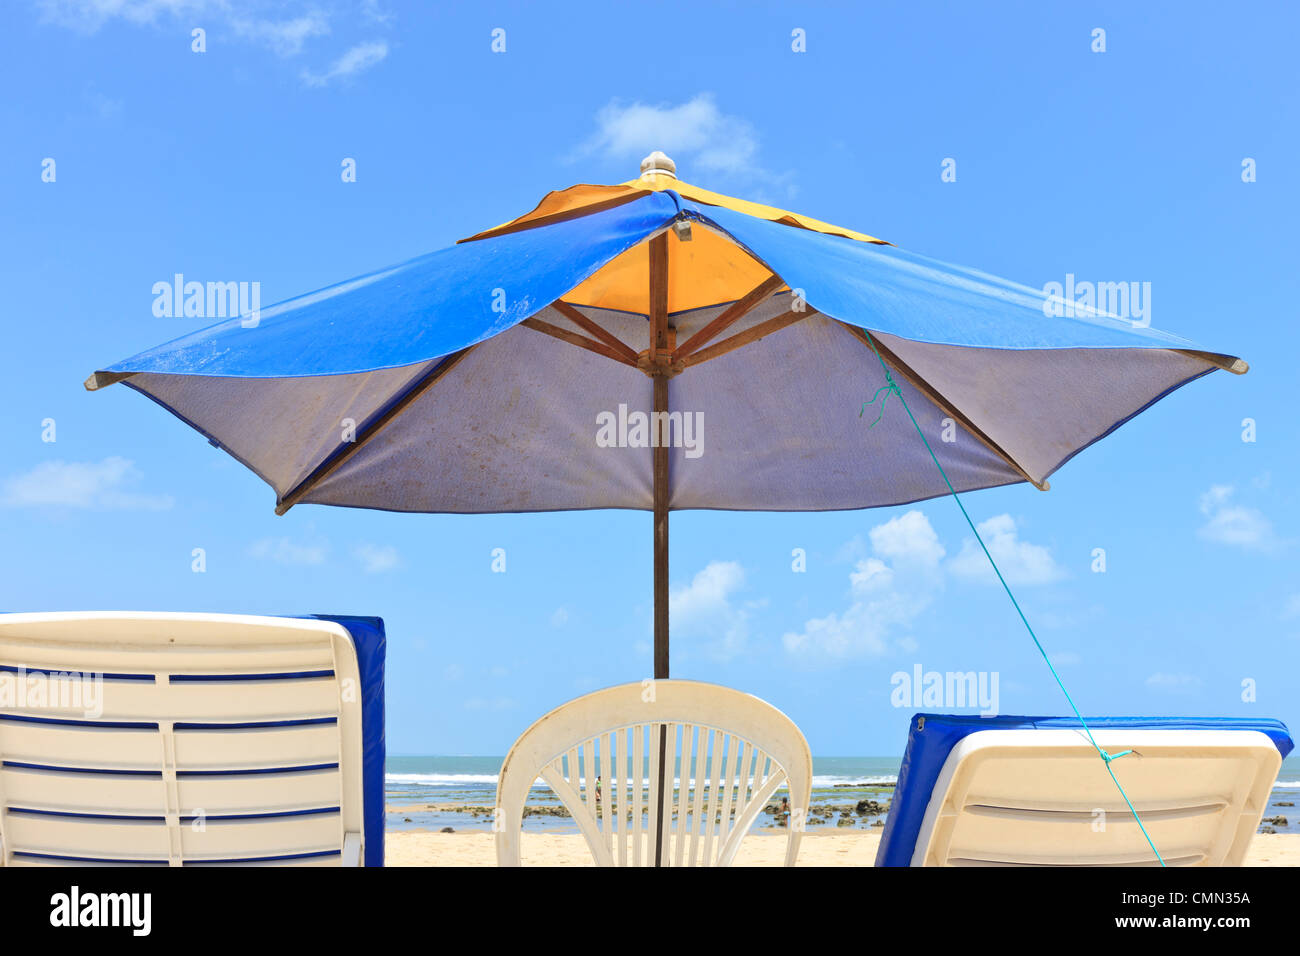 parasol, umbrella, sunshade, sun umbrella with beach chairs on beach, Brazil, Brasil Stock Photo